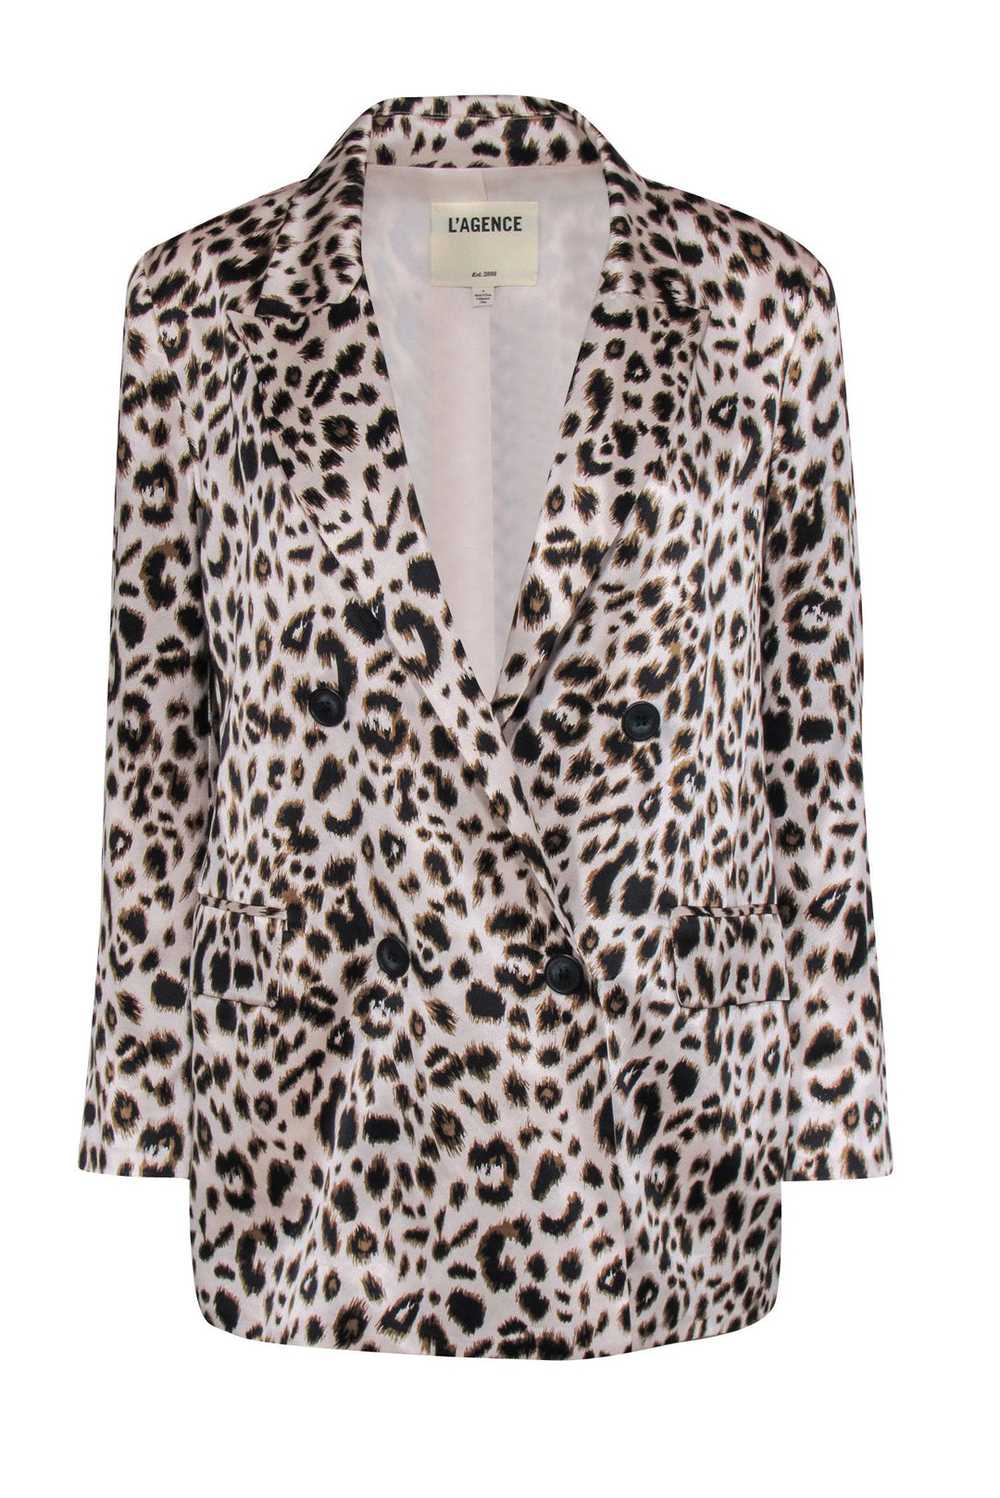 L'Agence - Cheetah Print Silk Double Breasted Bla… - image 1